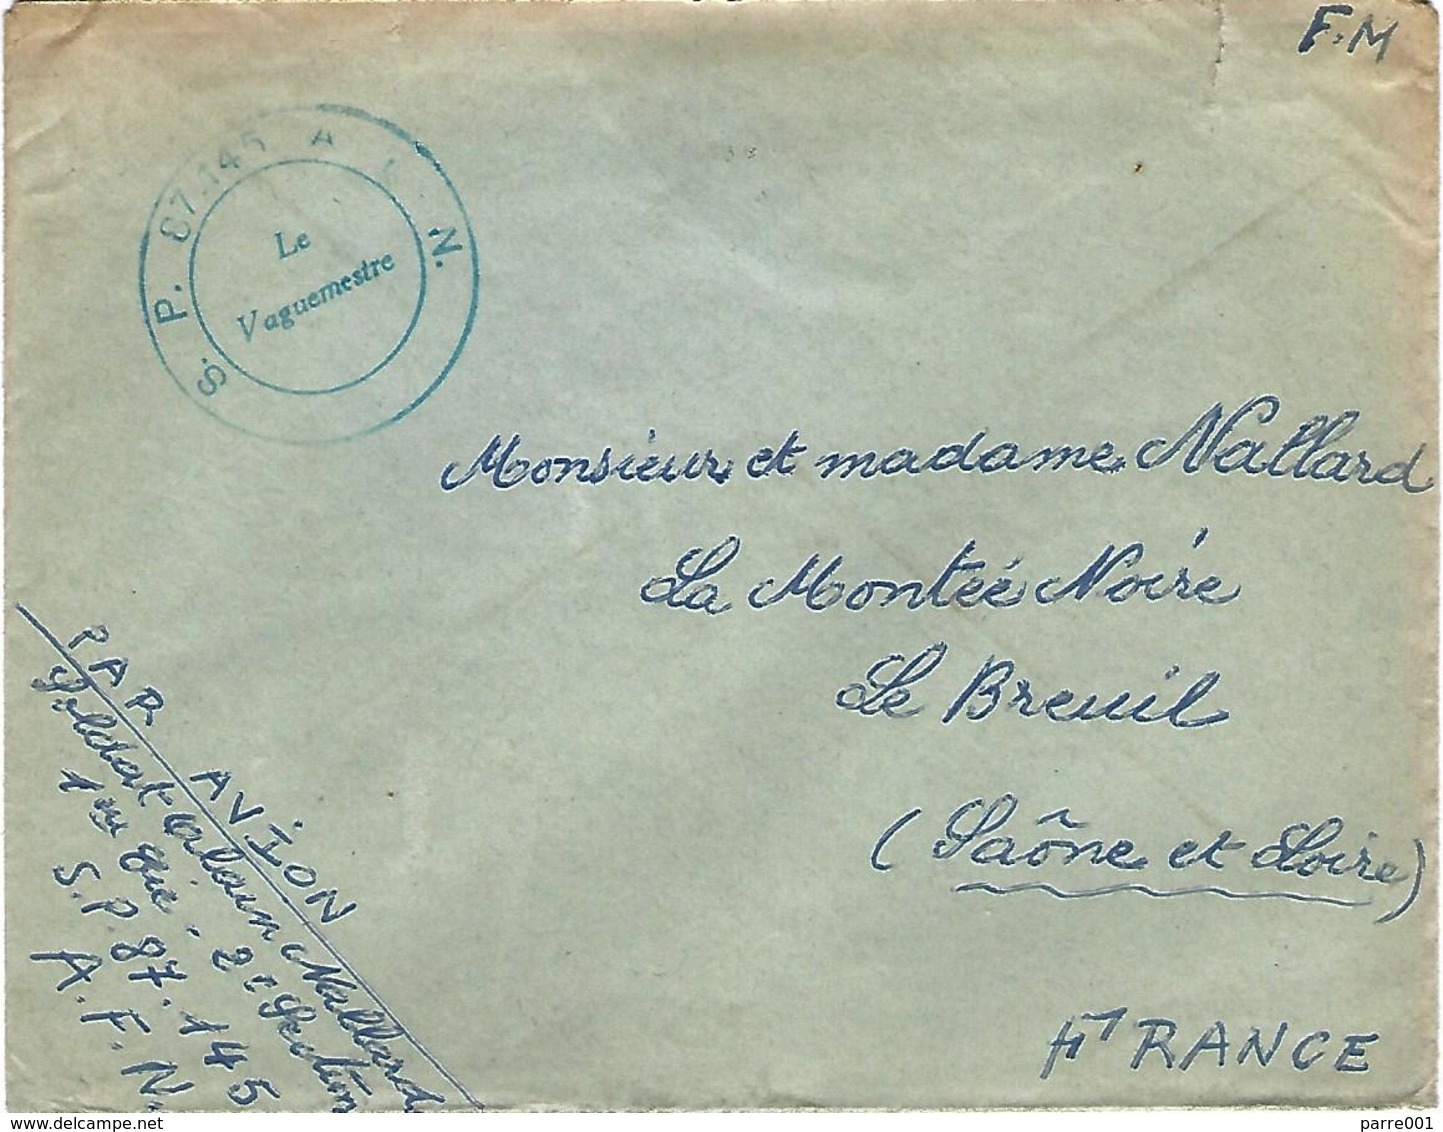 France 1956 Le Breuil SP 87.145 Guerre Algerie AFN Militair FM Cover - War Of Algeria